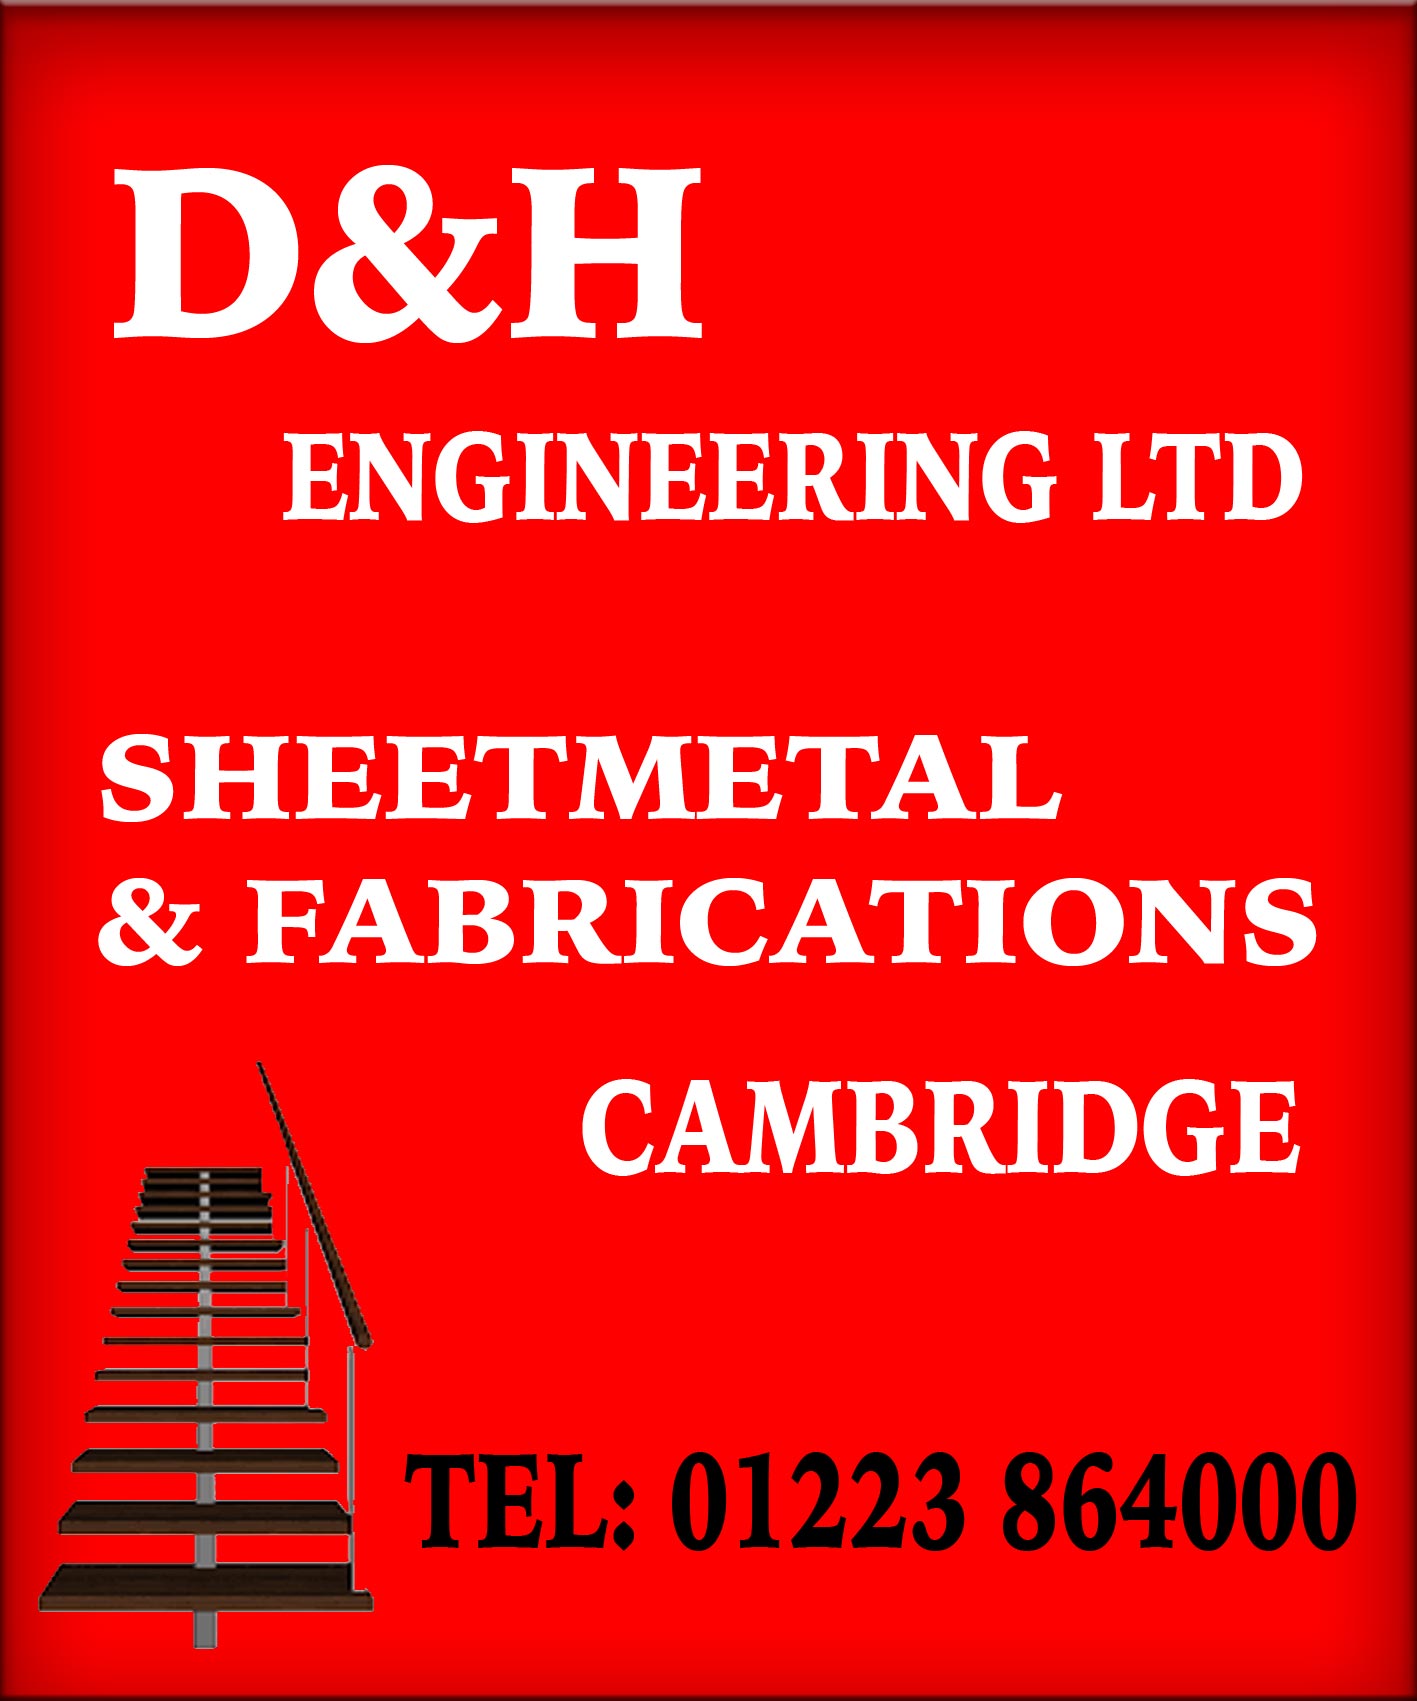 D&H Engineering Ltd